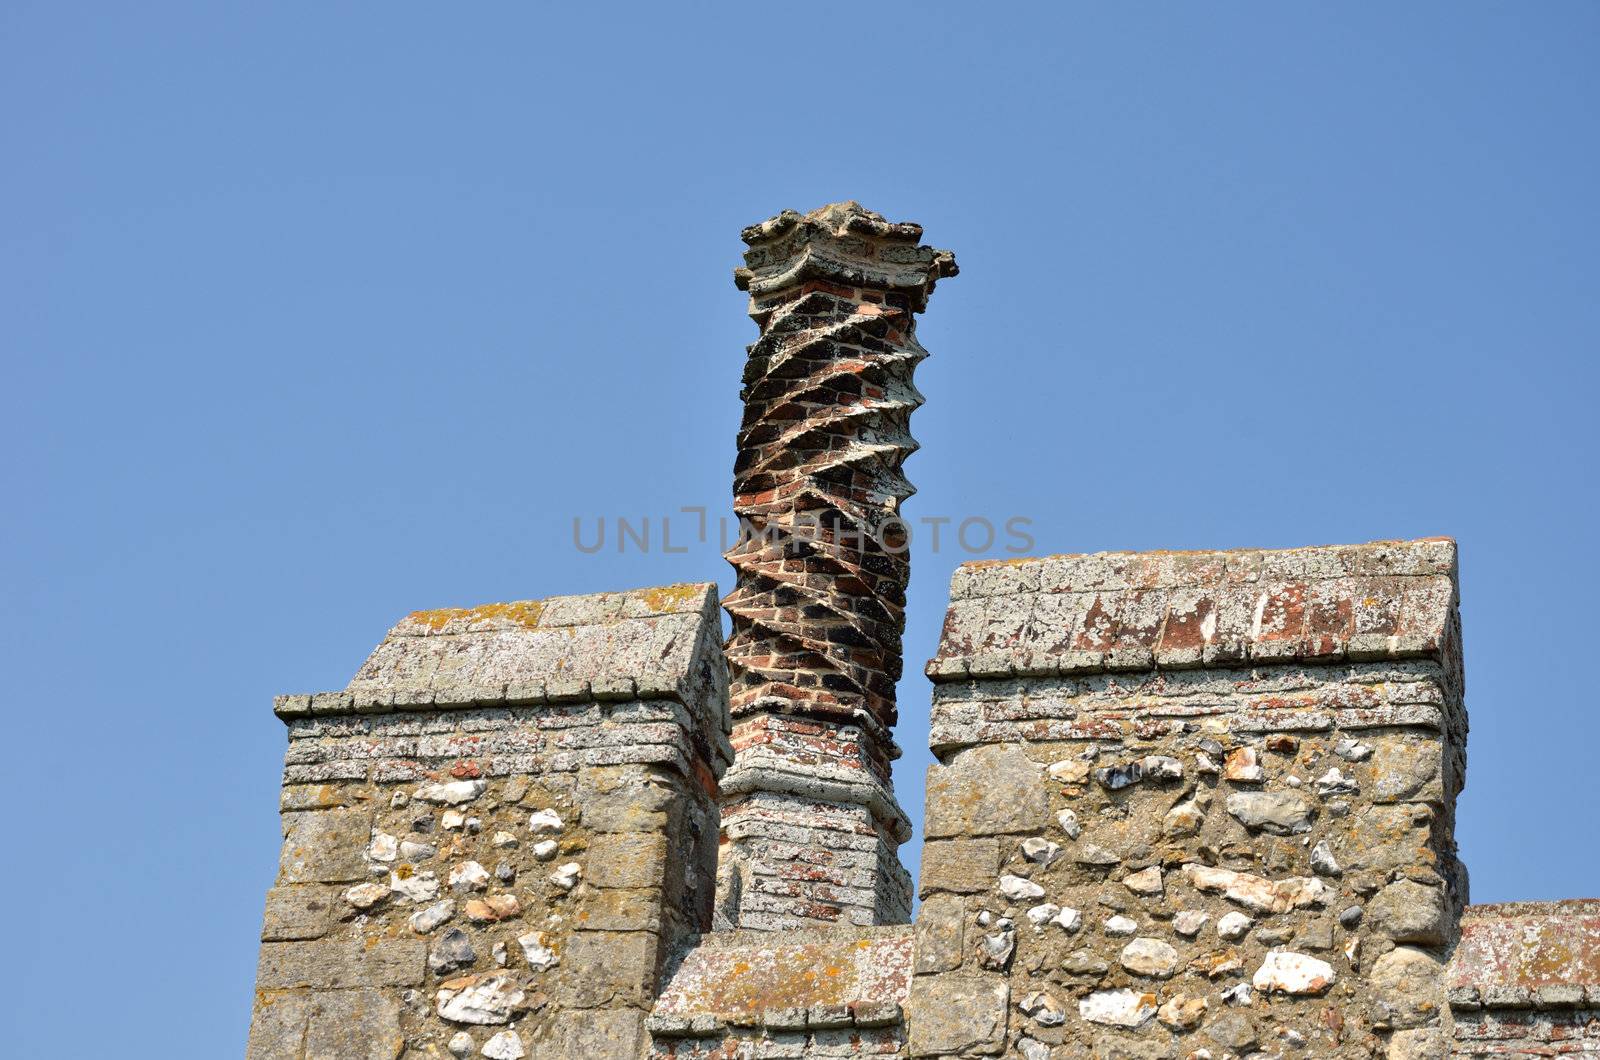 Elizabethan Chimney on castle walls